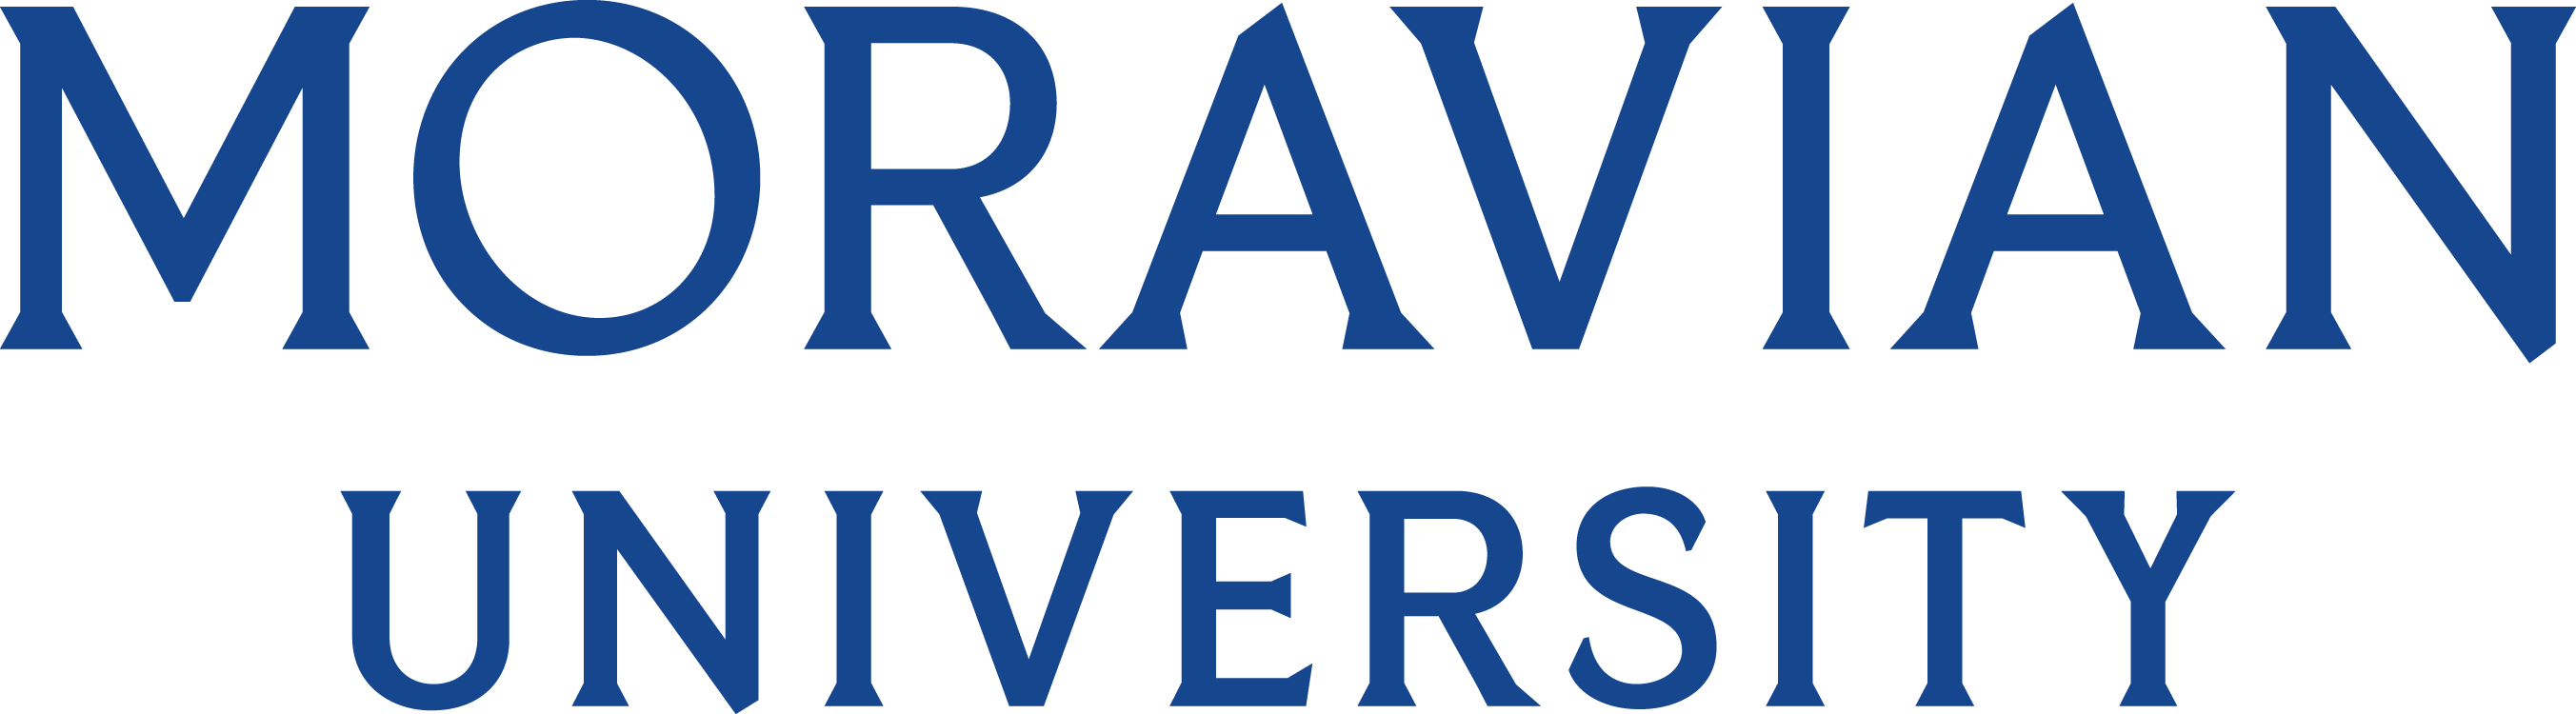 Moravian University logo